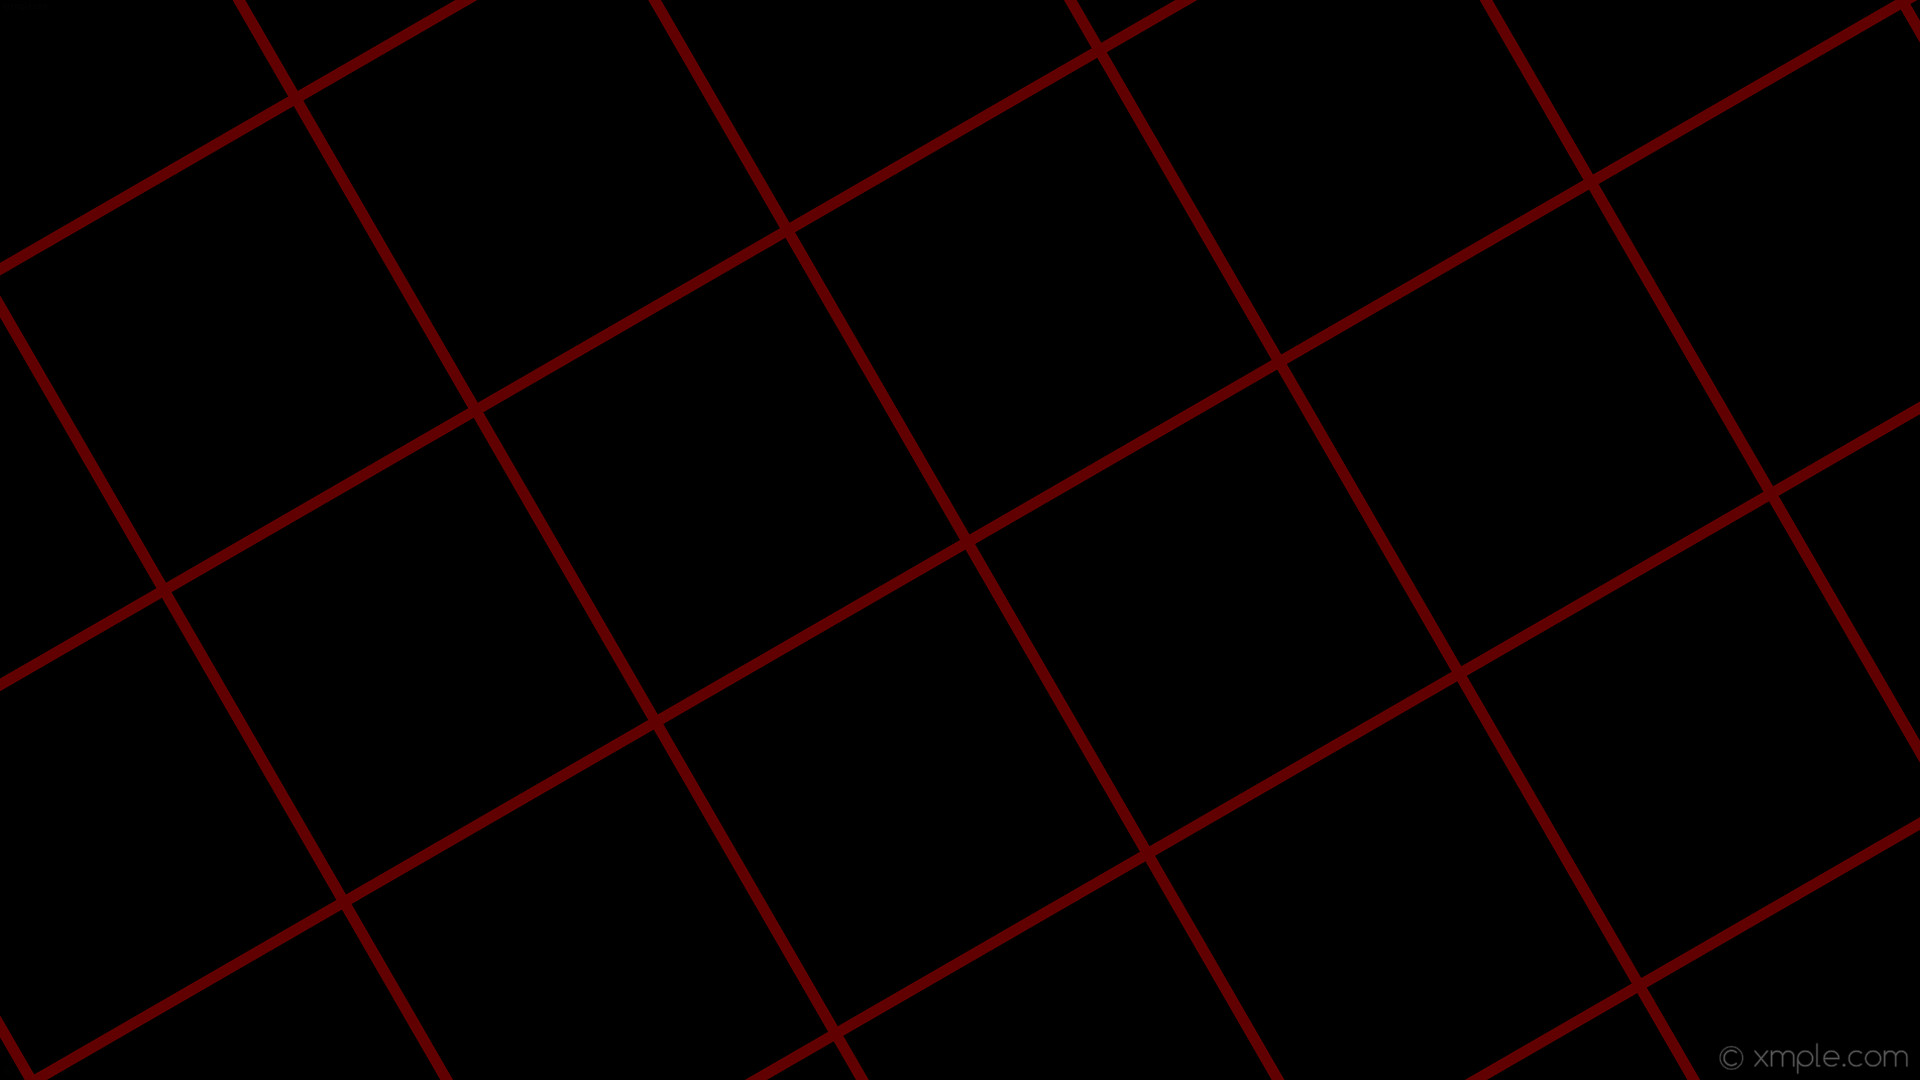 1920x1080 wallpaper graph paper black red grid dark red #000000 #8b0000 30Â° 11px 360px